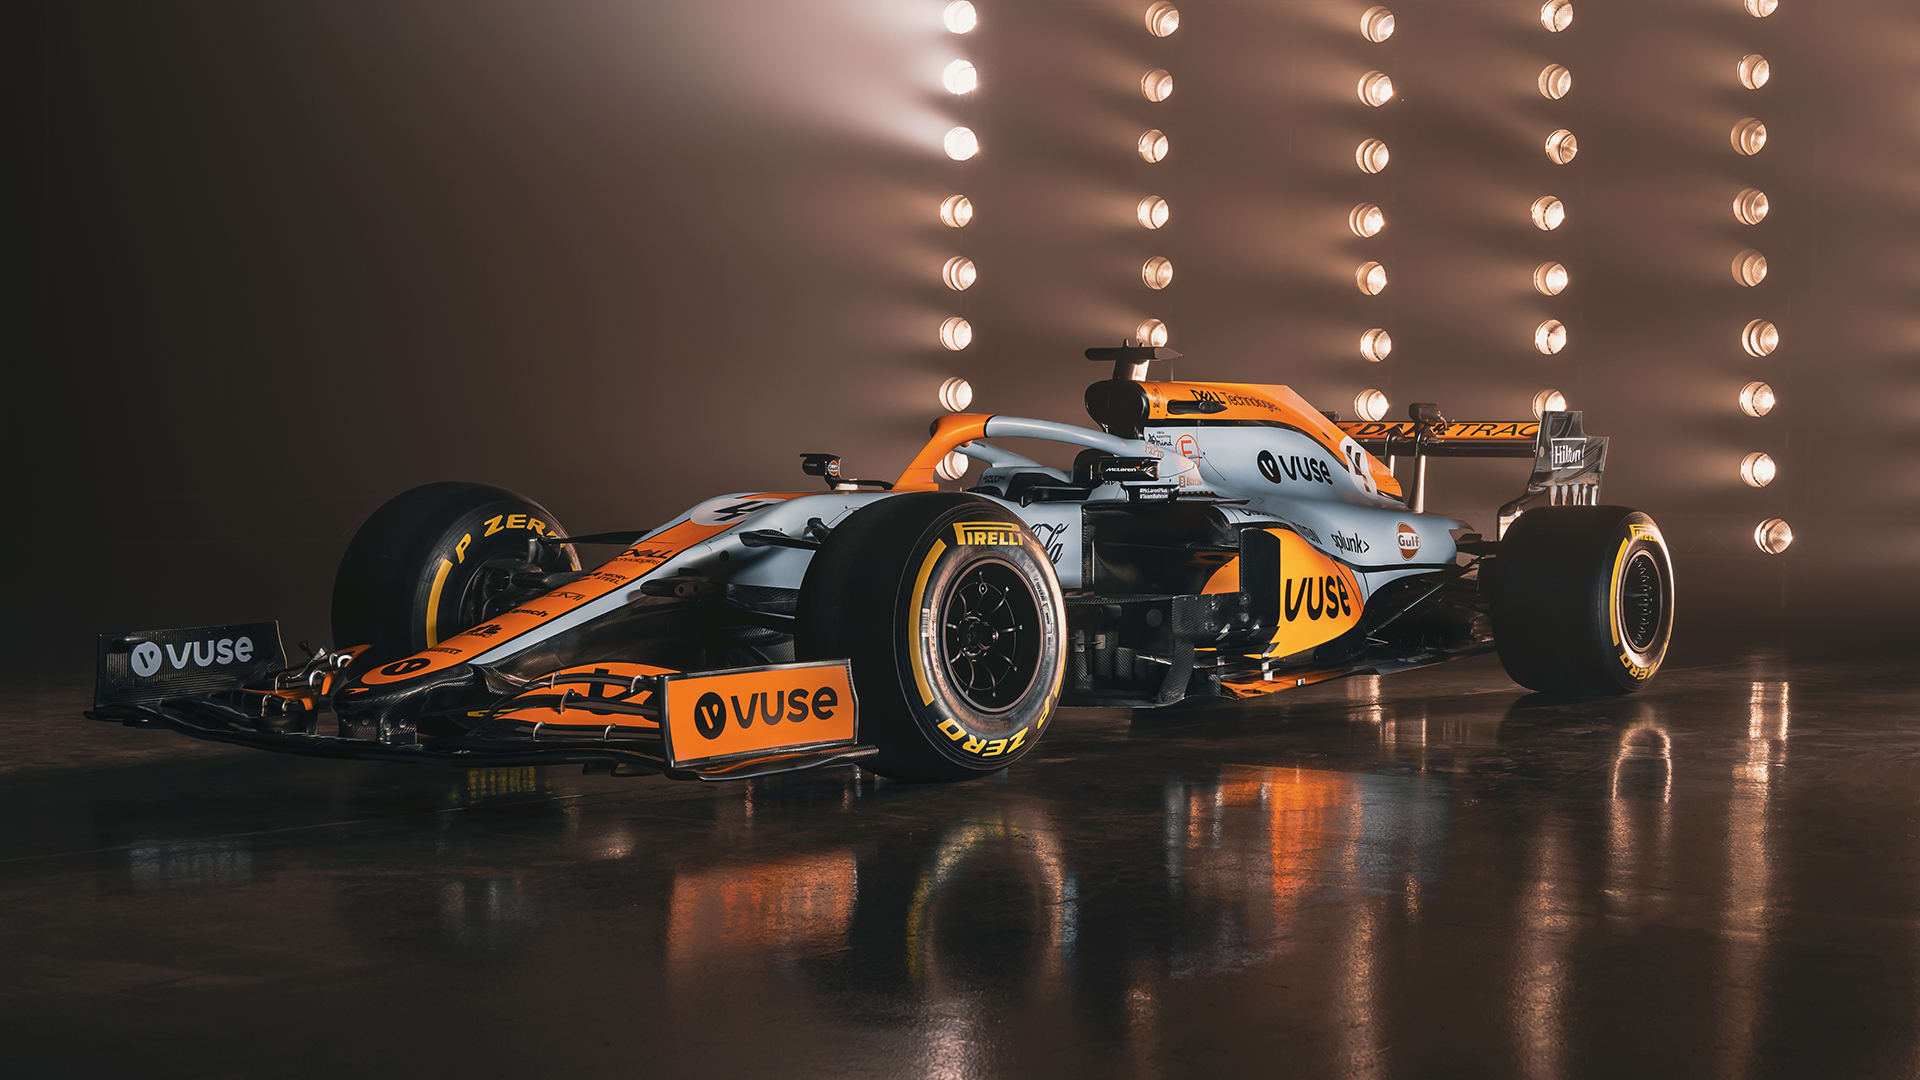 McLaren to run oneoff livery for Monaco Grand Prix, using iconic Gulf